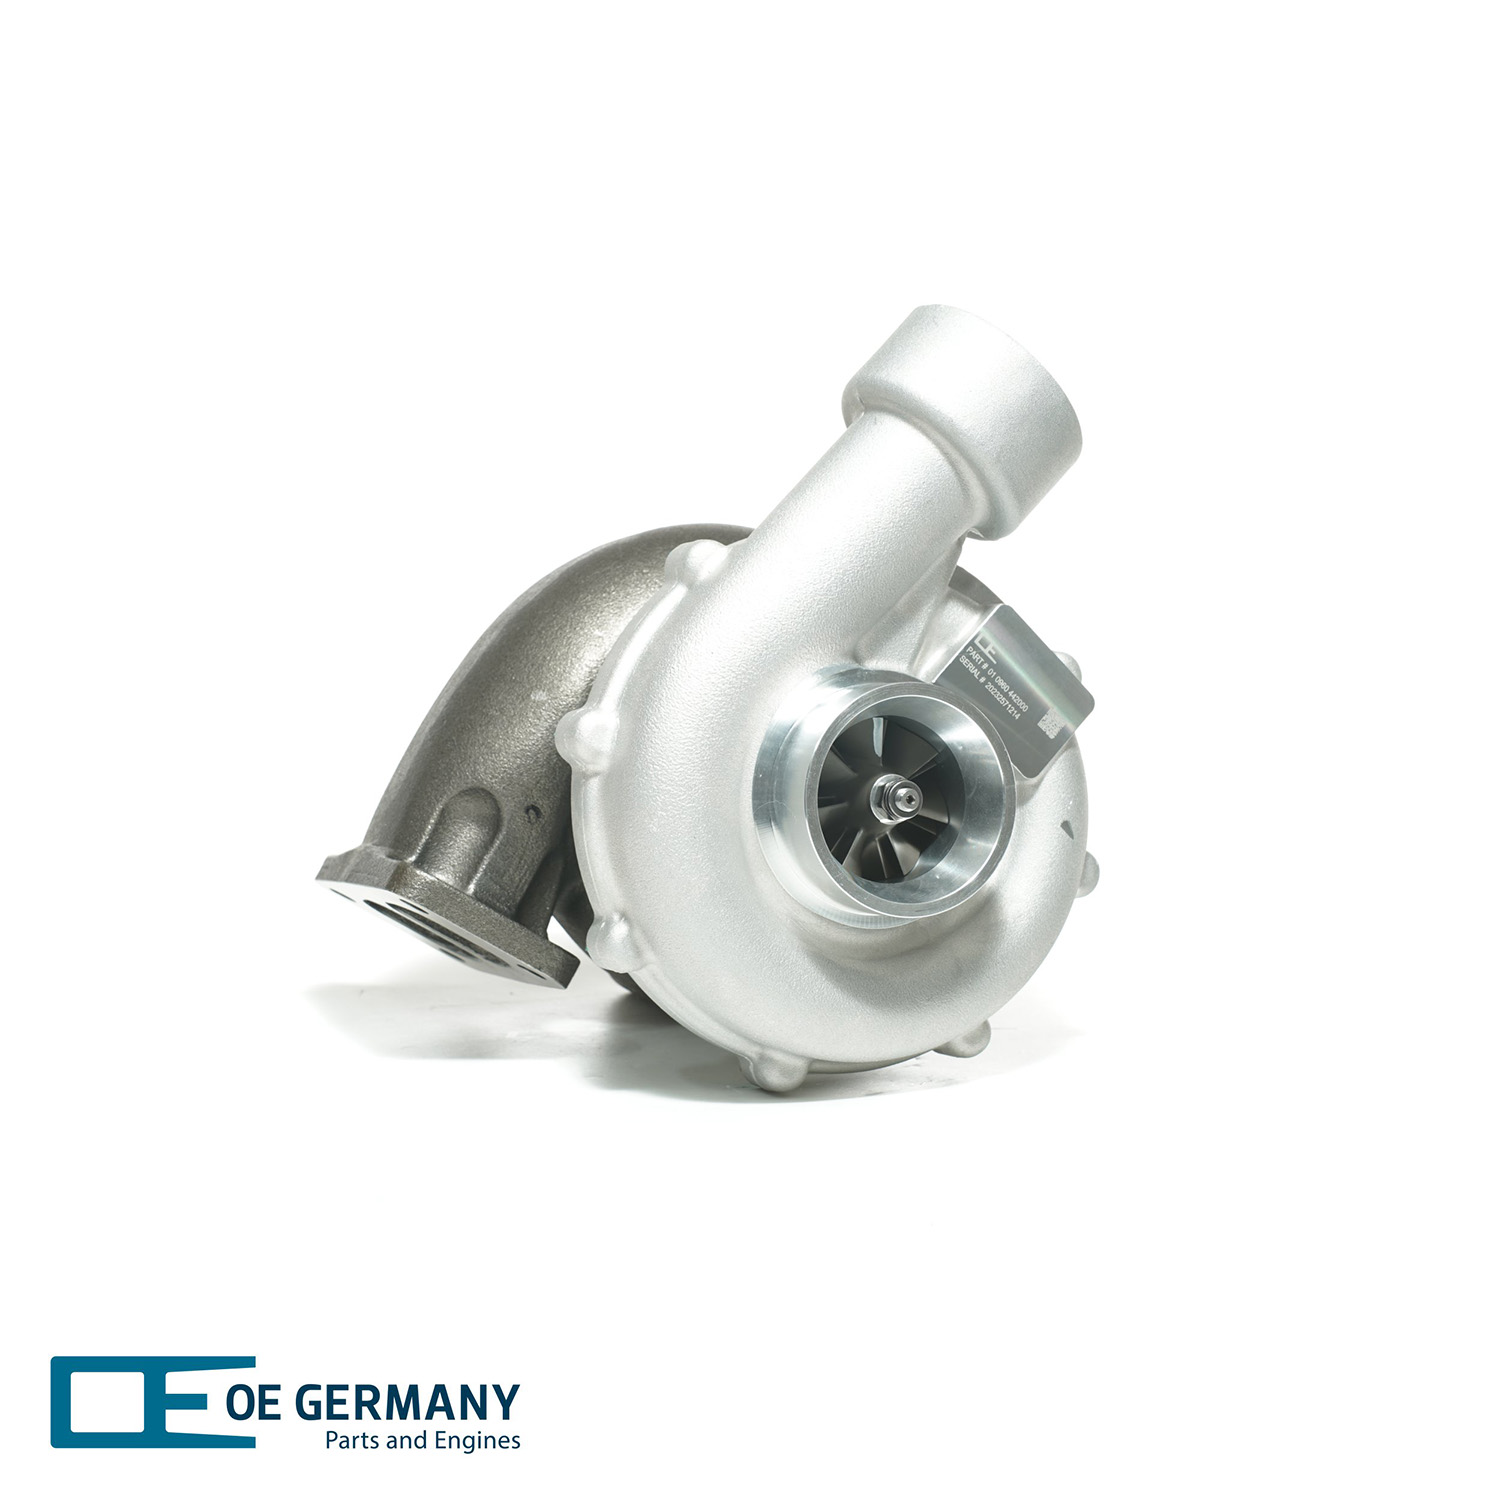 OE Germany Turbolader 01 0960 442000